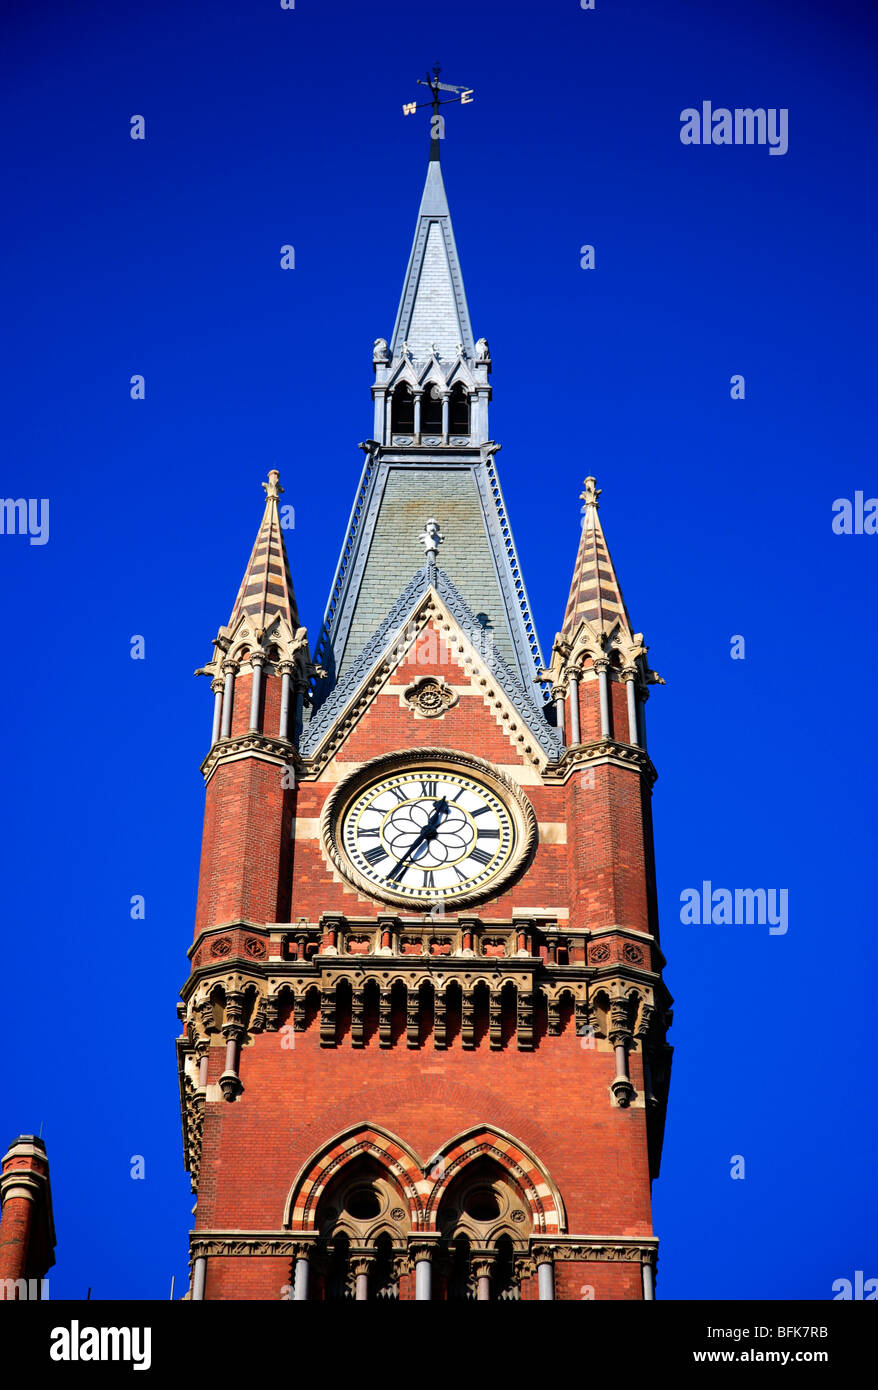 Clock Tower St Pancras Bahnhof Zug Station London City England UK Stockfoto